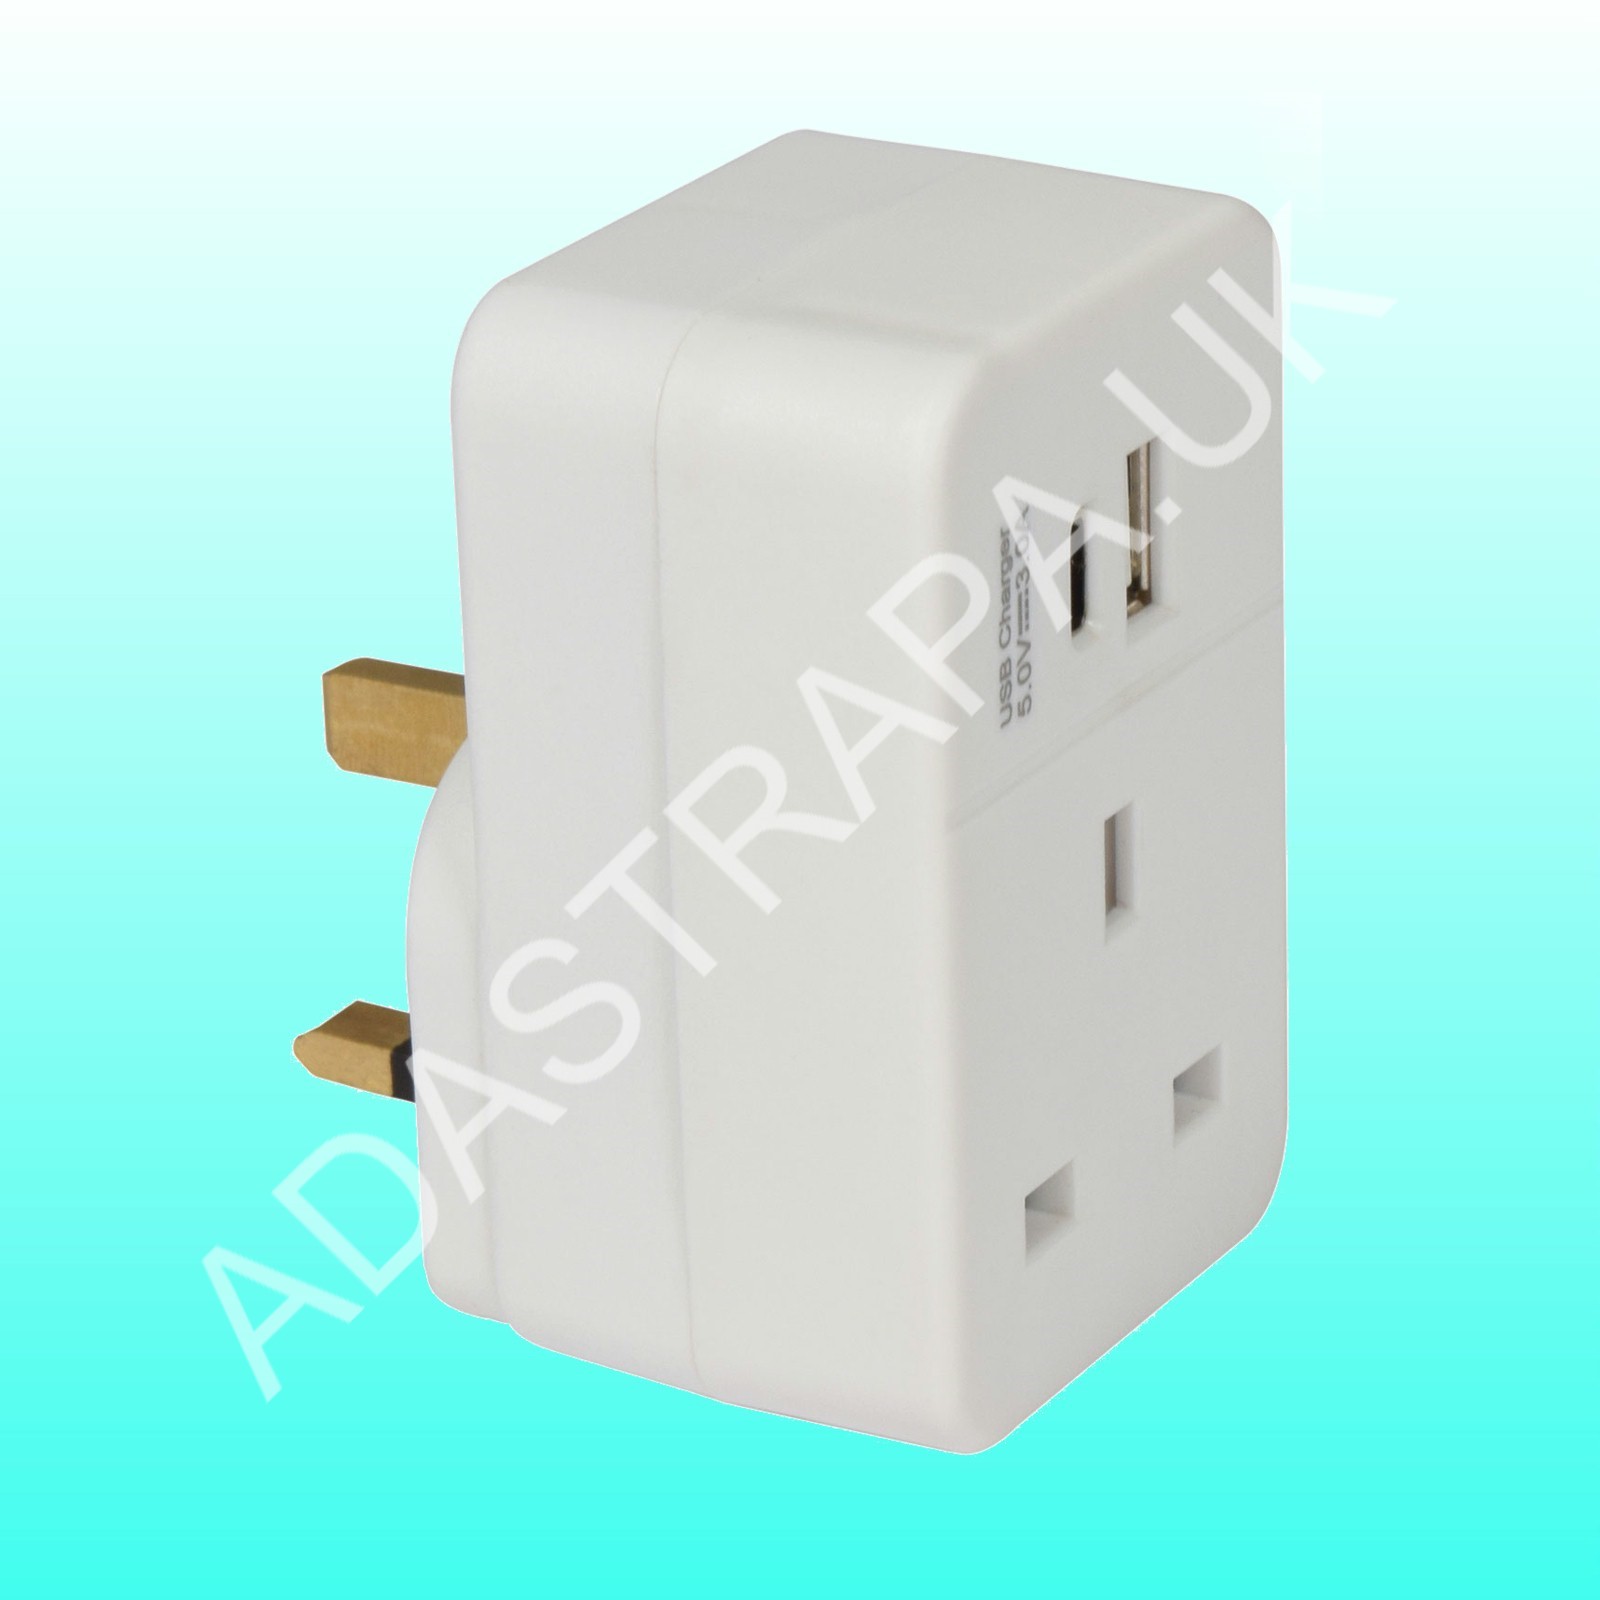 Mercury Plug Through UK Mains Adaptor with USB A and PD fast charging USB C Port - 429.691UK